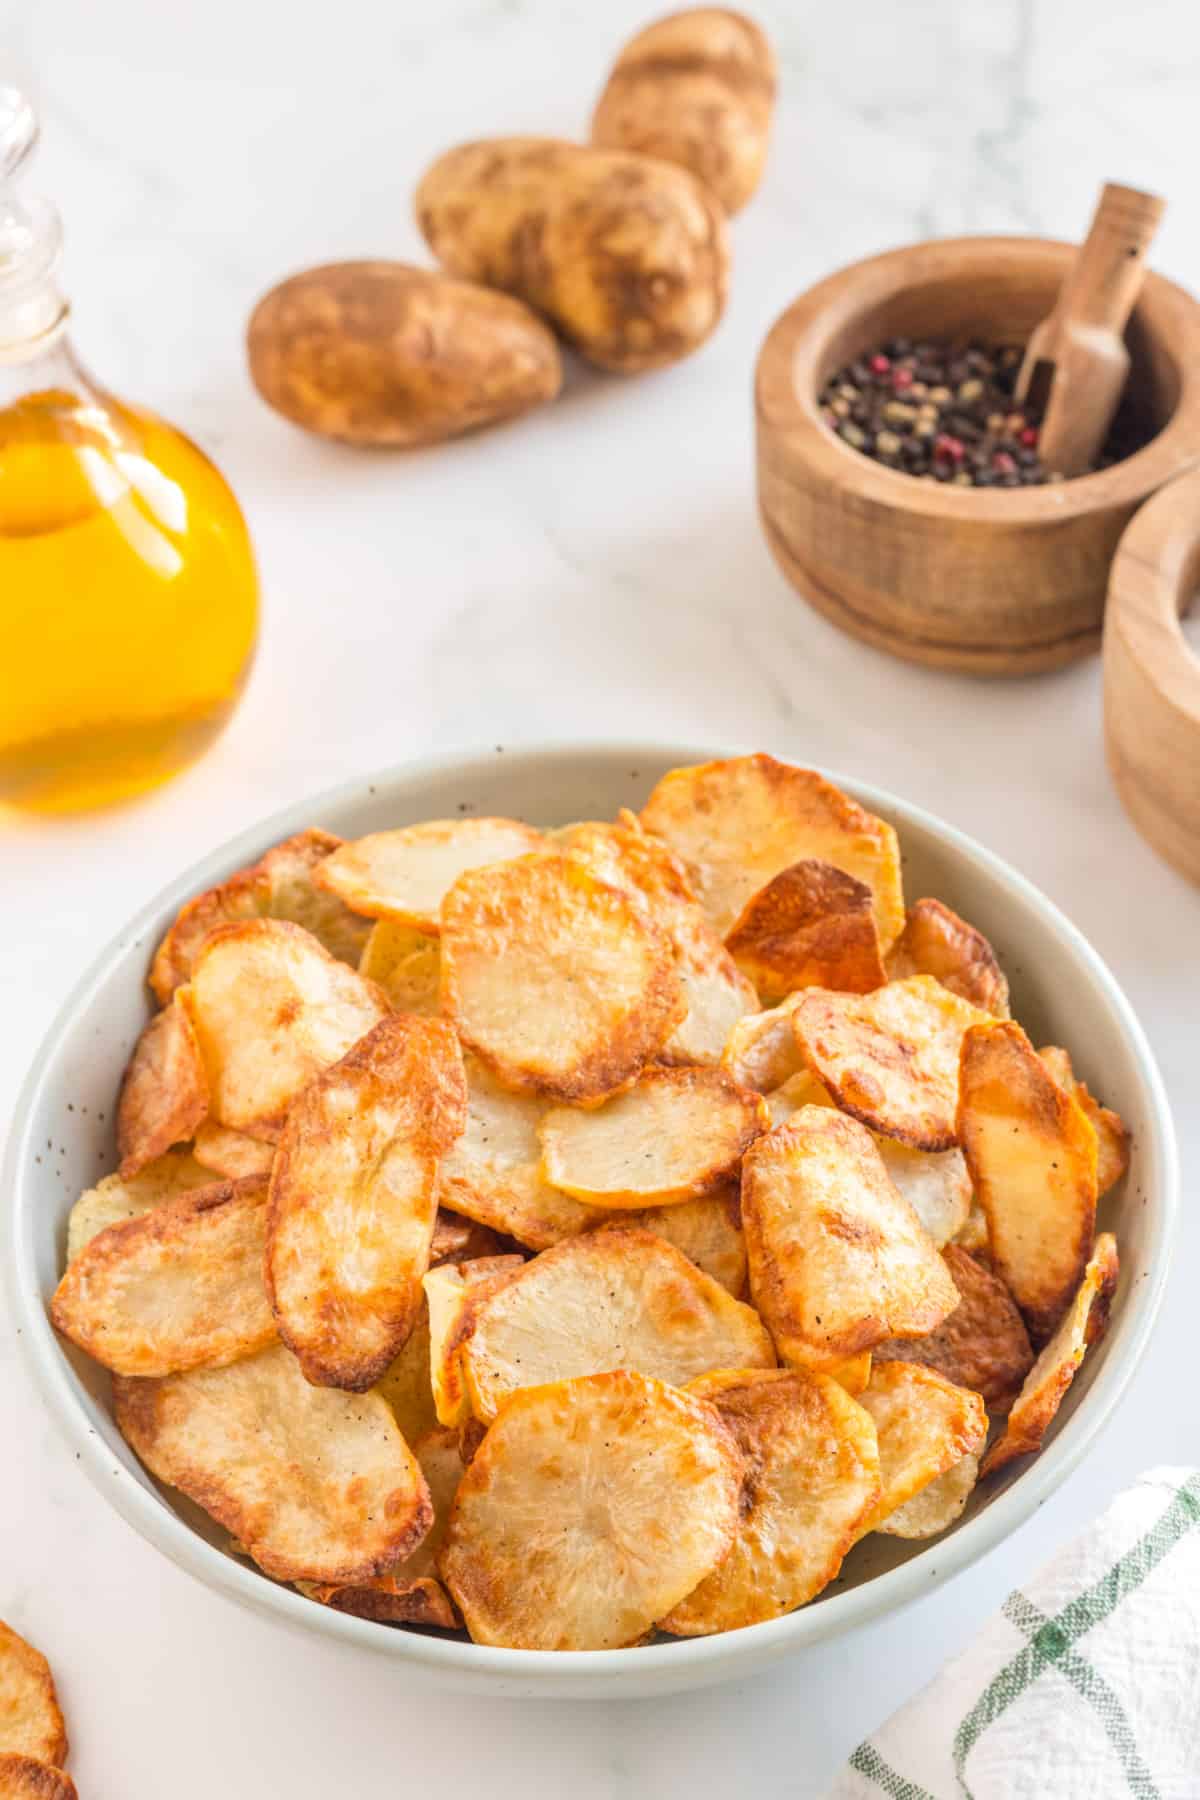 Homemade Potato Chips Recipe: How to Make It